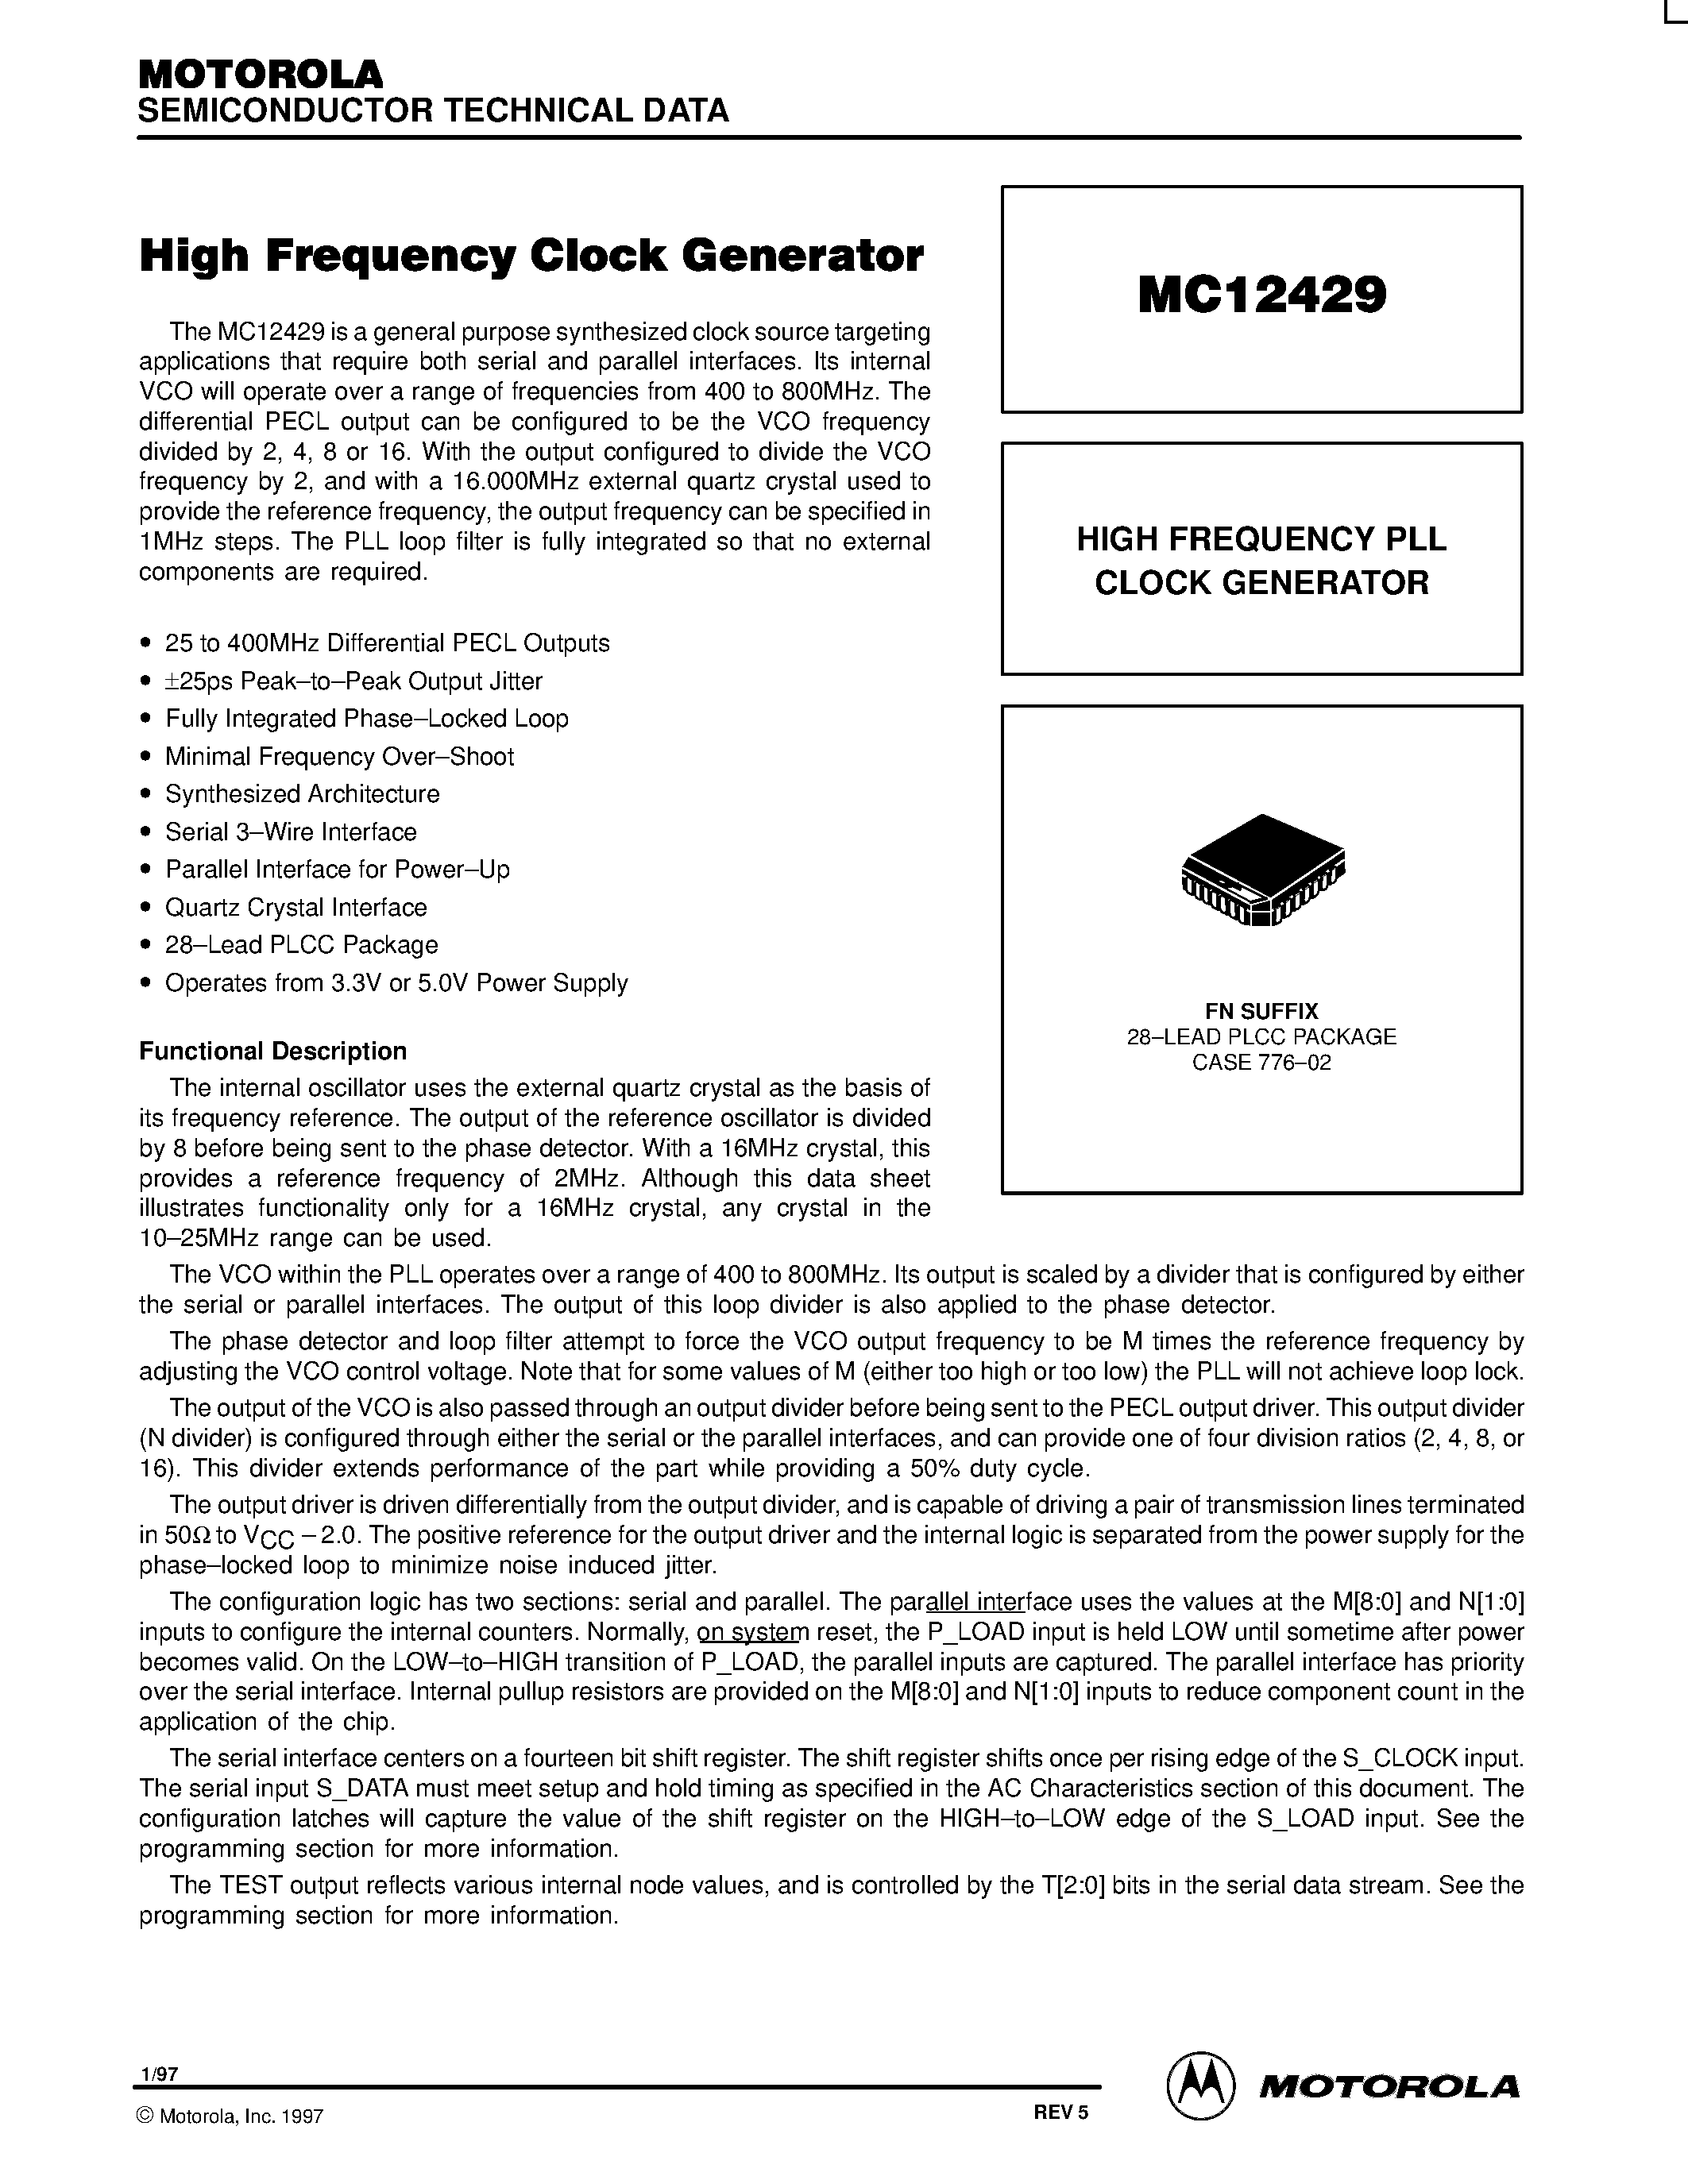 Datasheet MC12429FN - HIGH FREQUENCY PLL CLOCK GENERATOR page 1